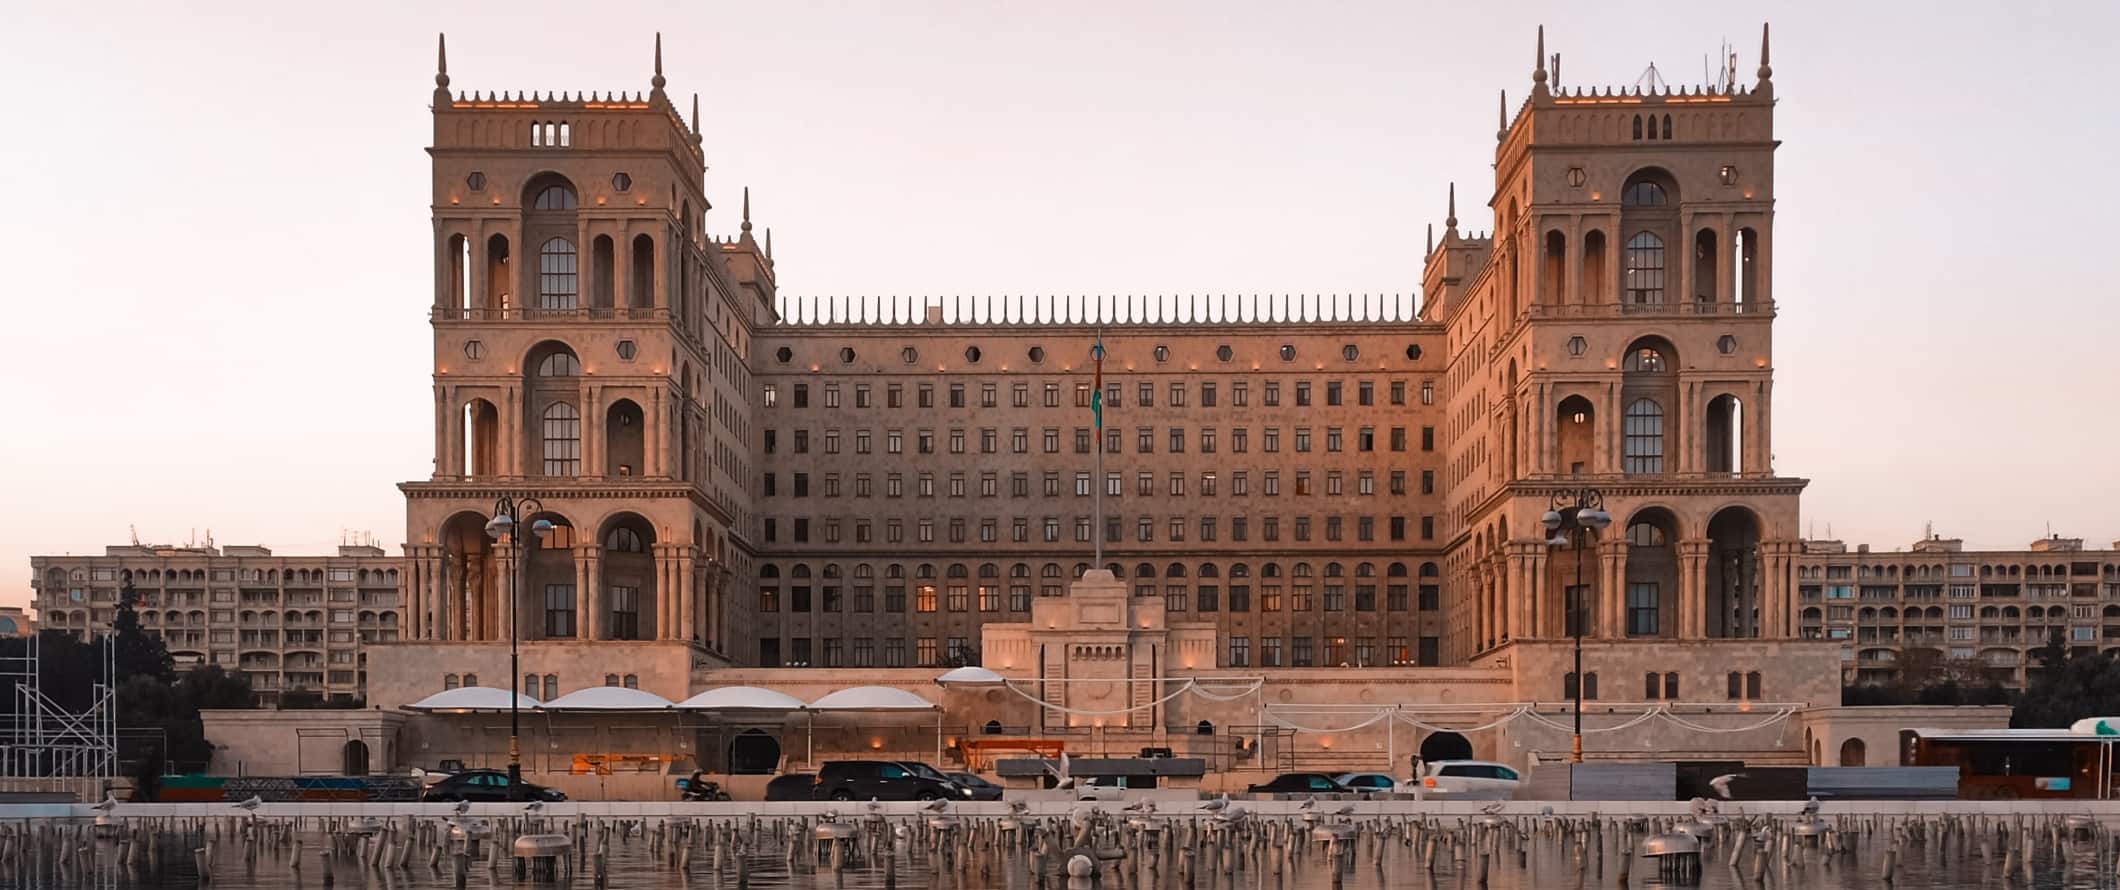 Imposing historic government building in Baku, Azerbaijan at sunset